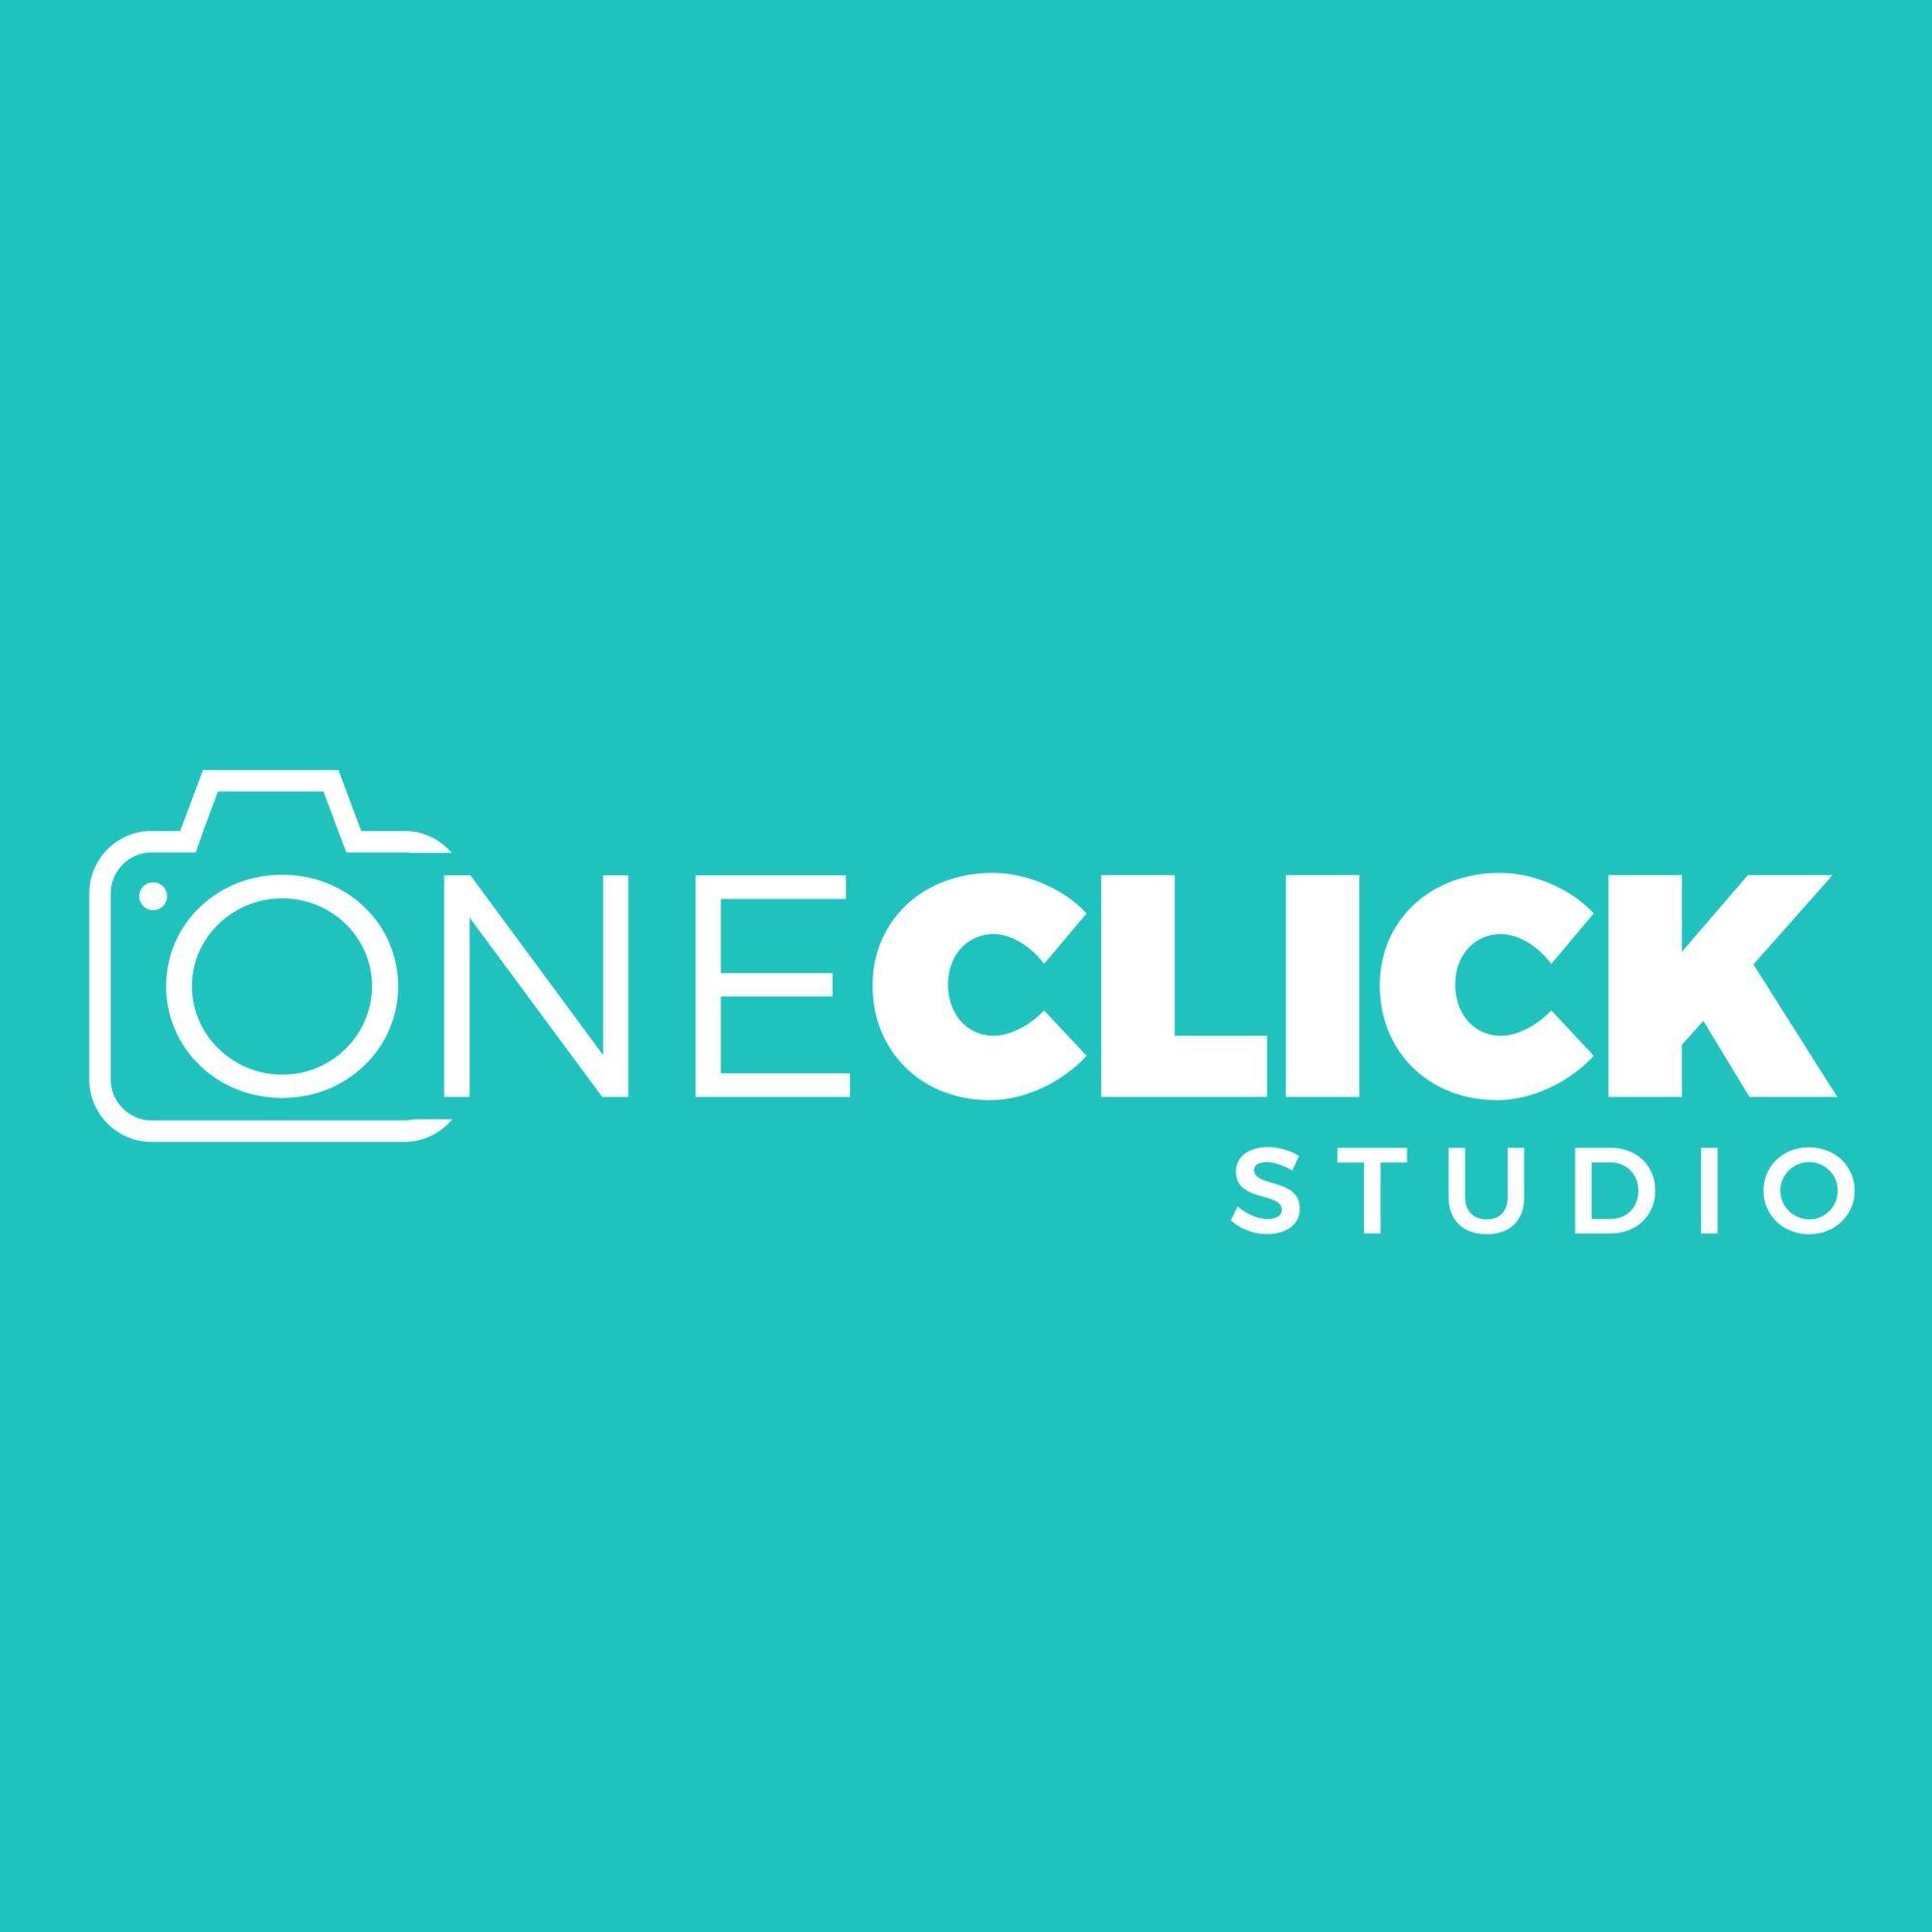 One Click Studio in Bhavnagar logo